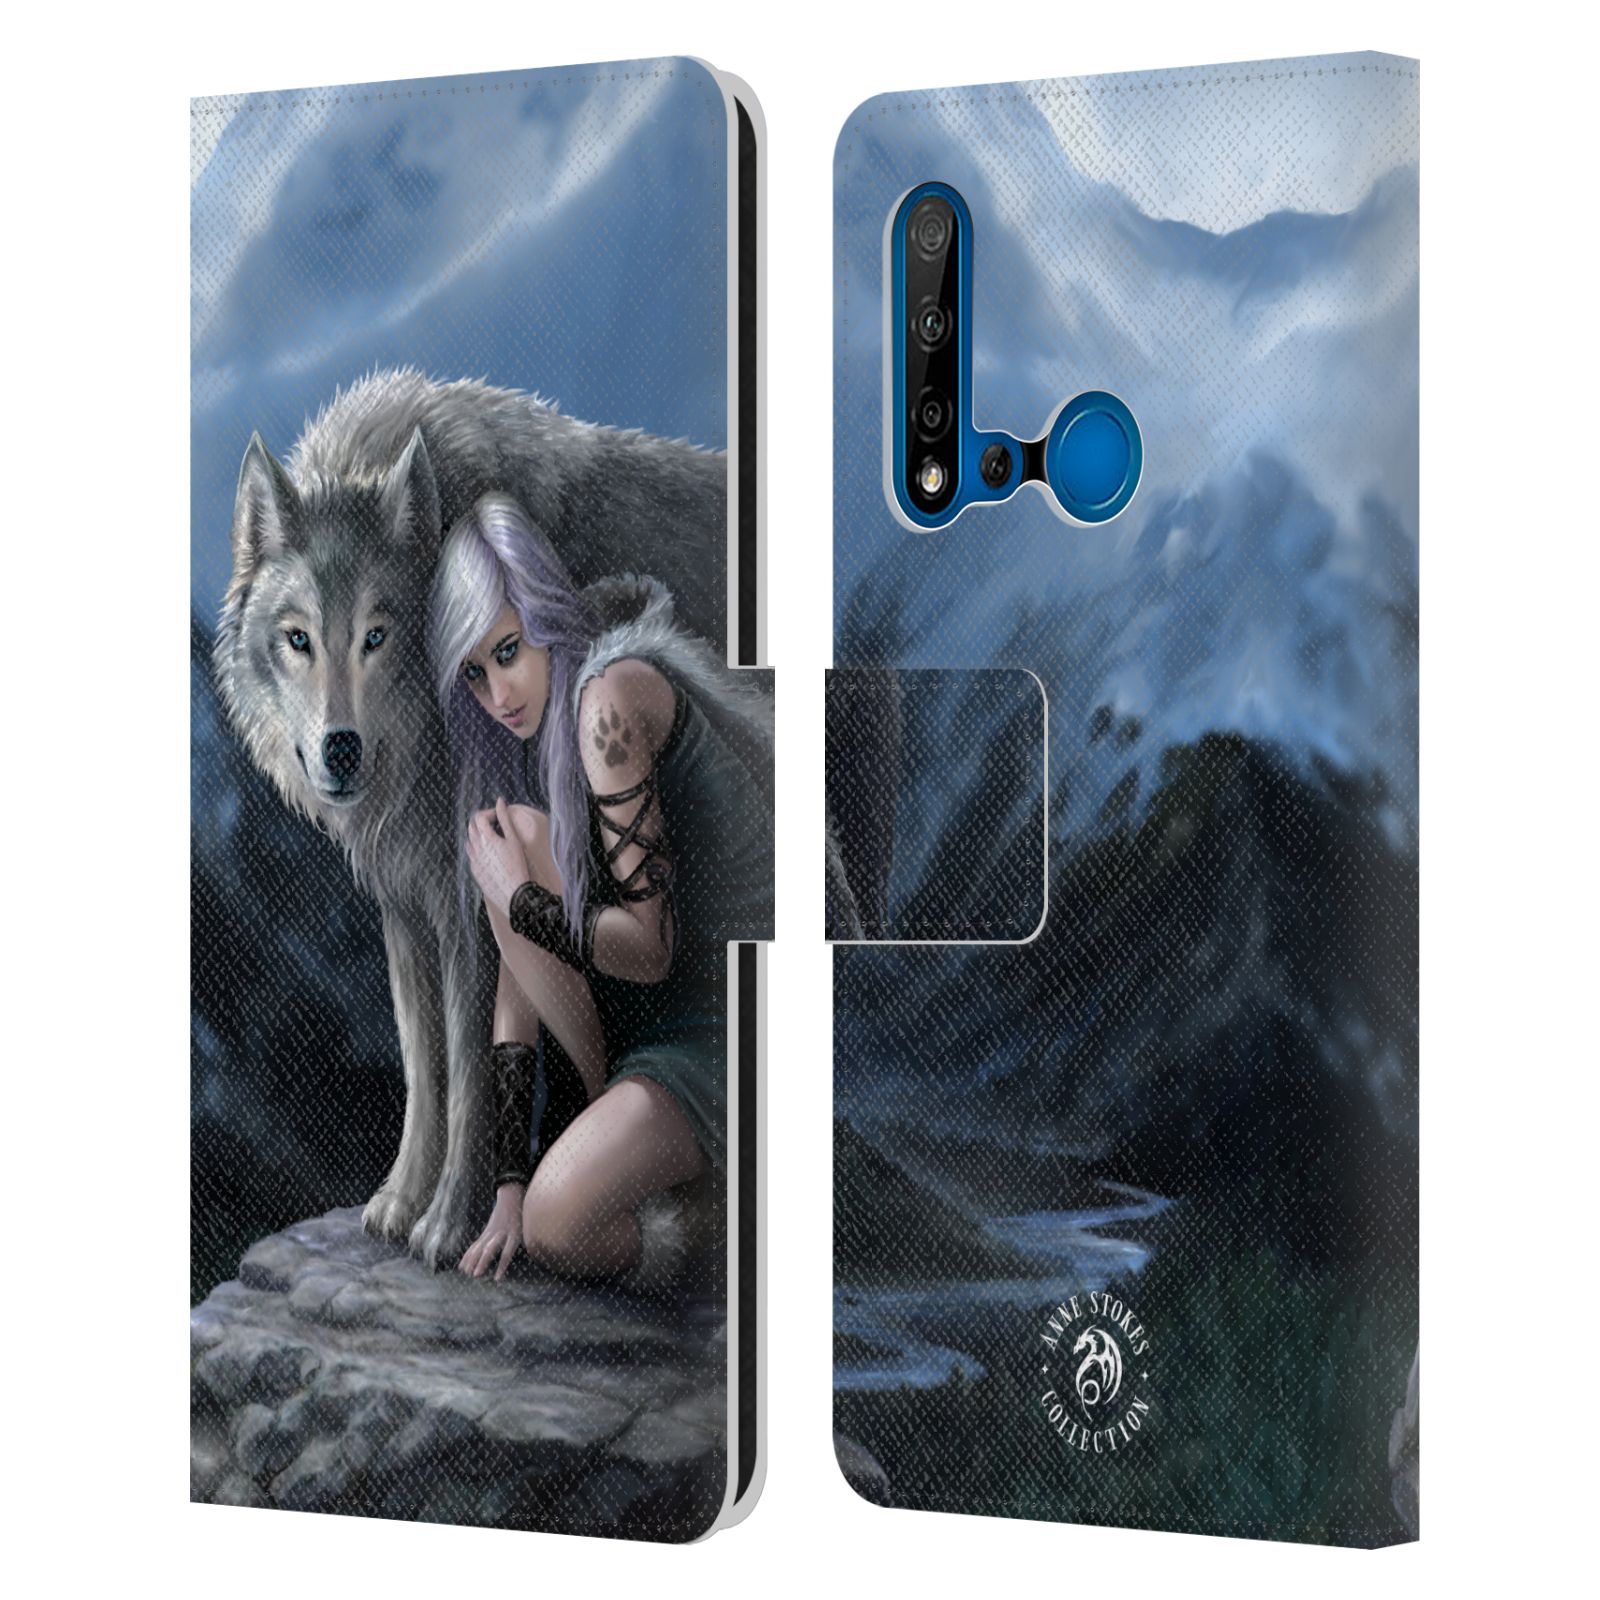 Pouzdro na mobil Huawei P20 LITE 2019 - Head Case - fantasy - vlk ochránce